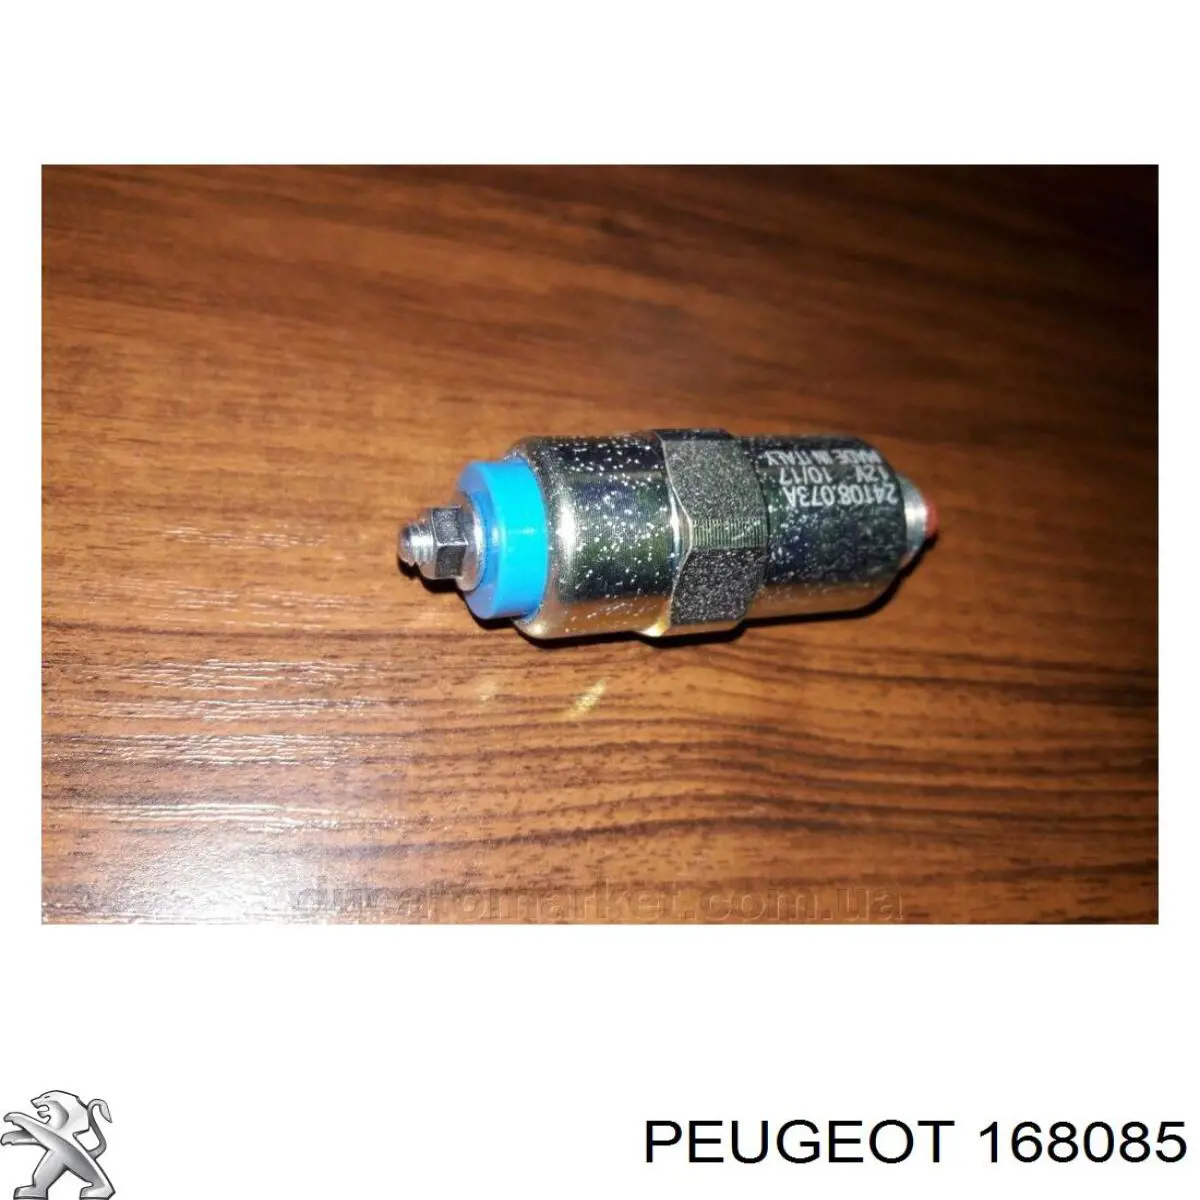 168085 Peugeot/Citroen corte, inyección combustible